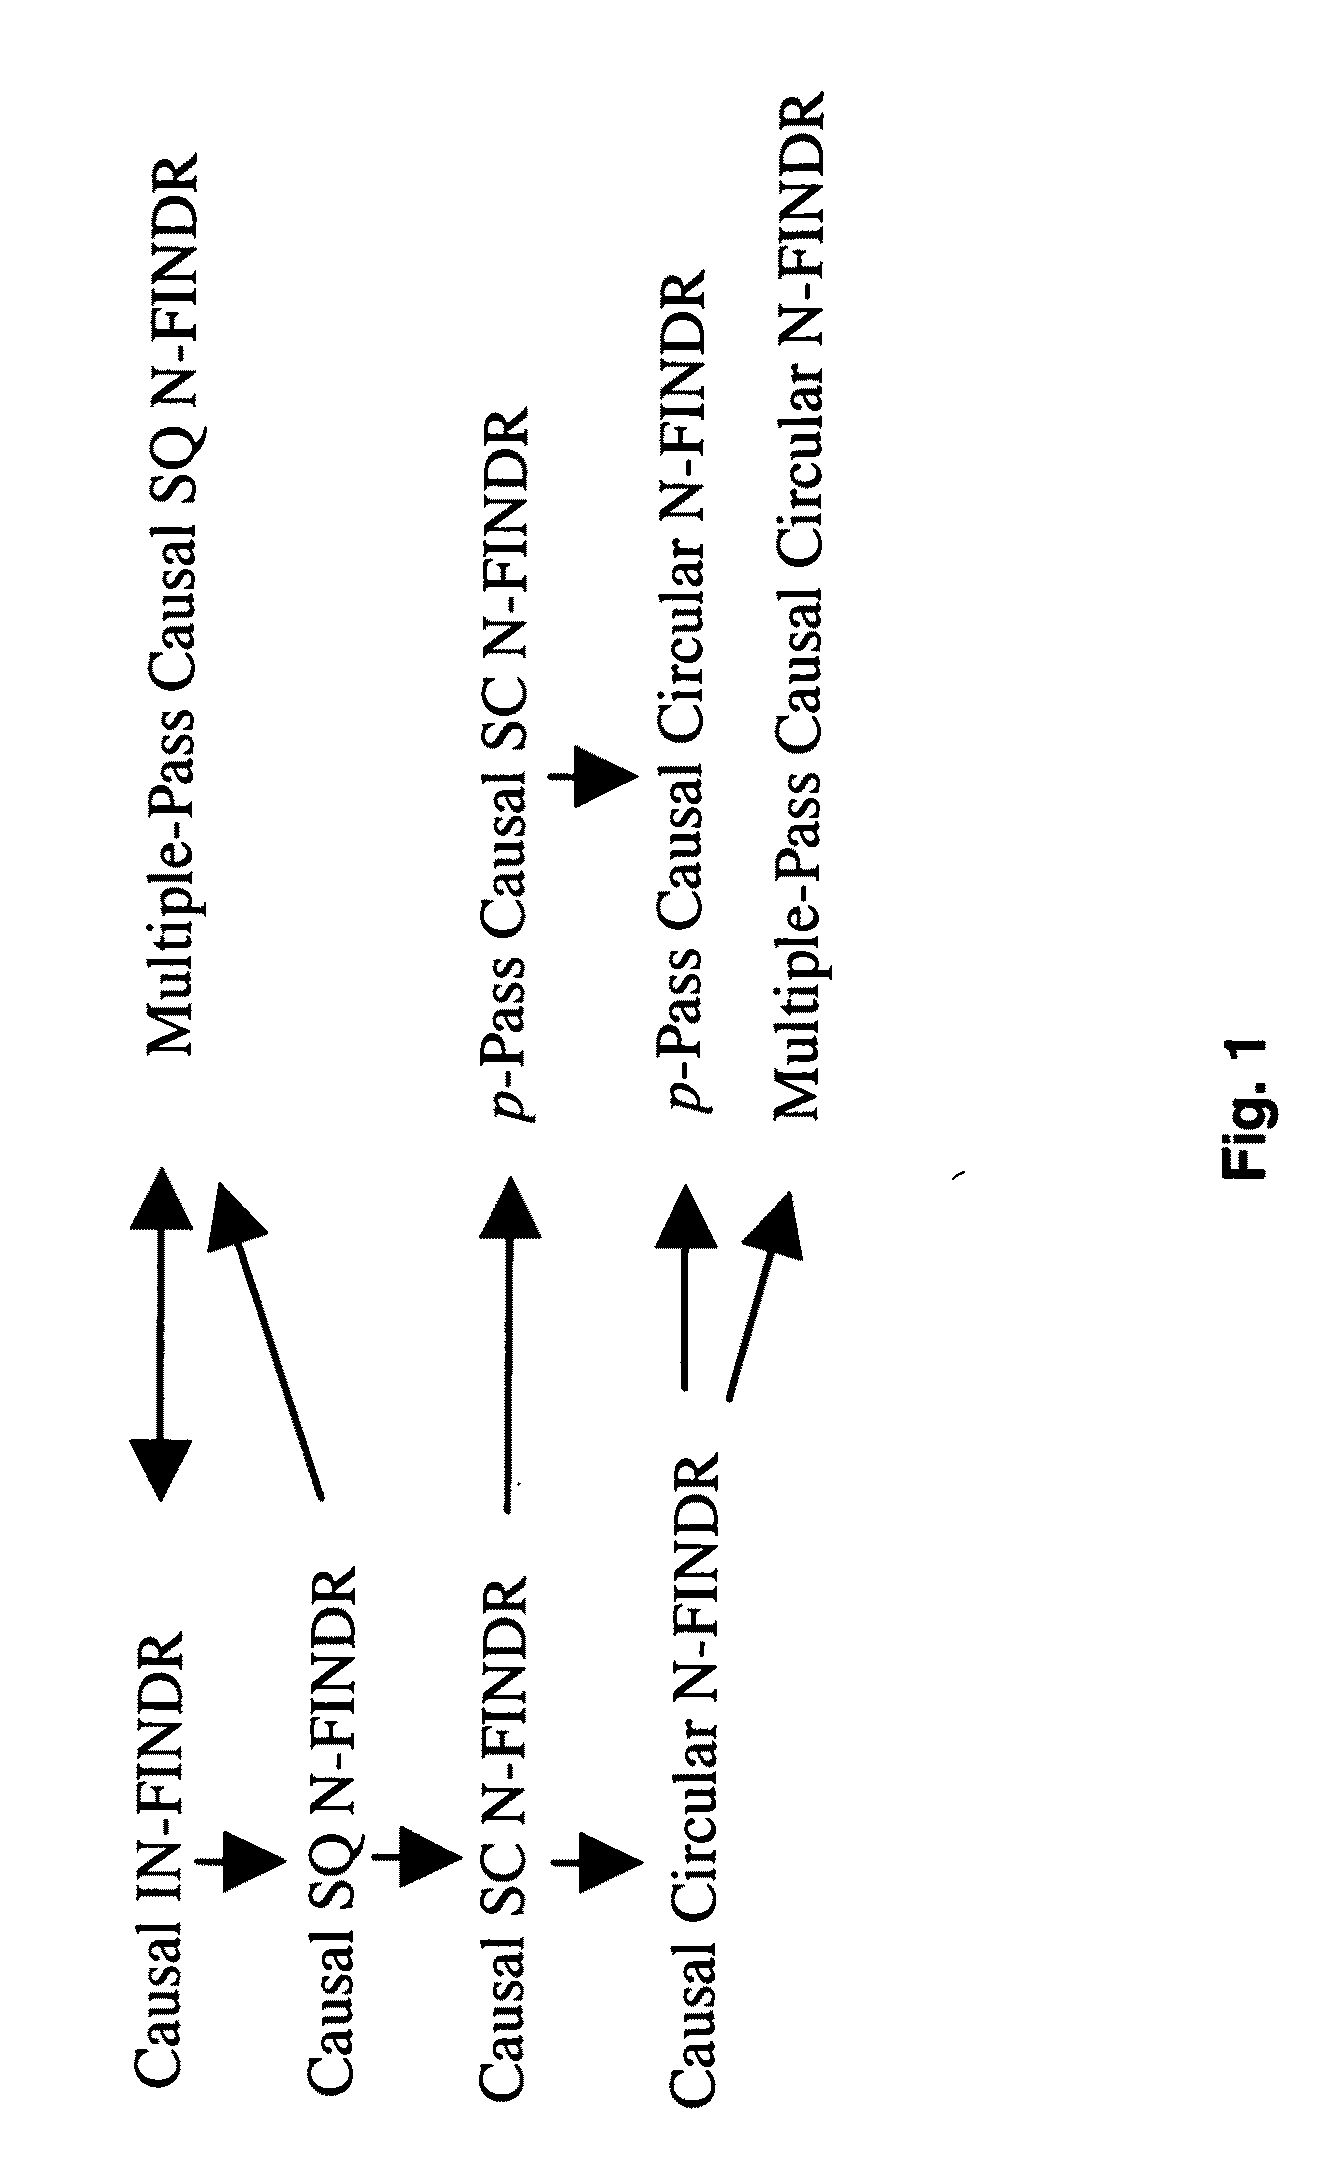 Maximum simplex volume criterion-based endmember extraction algorithms